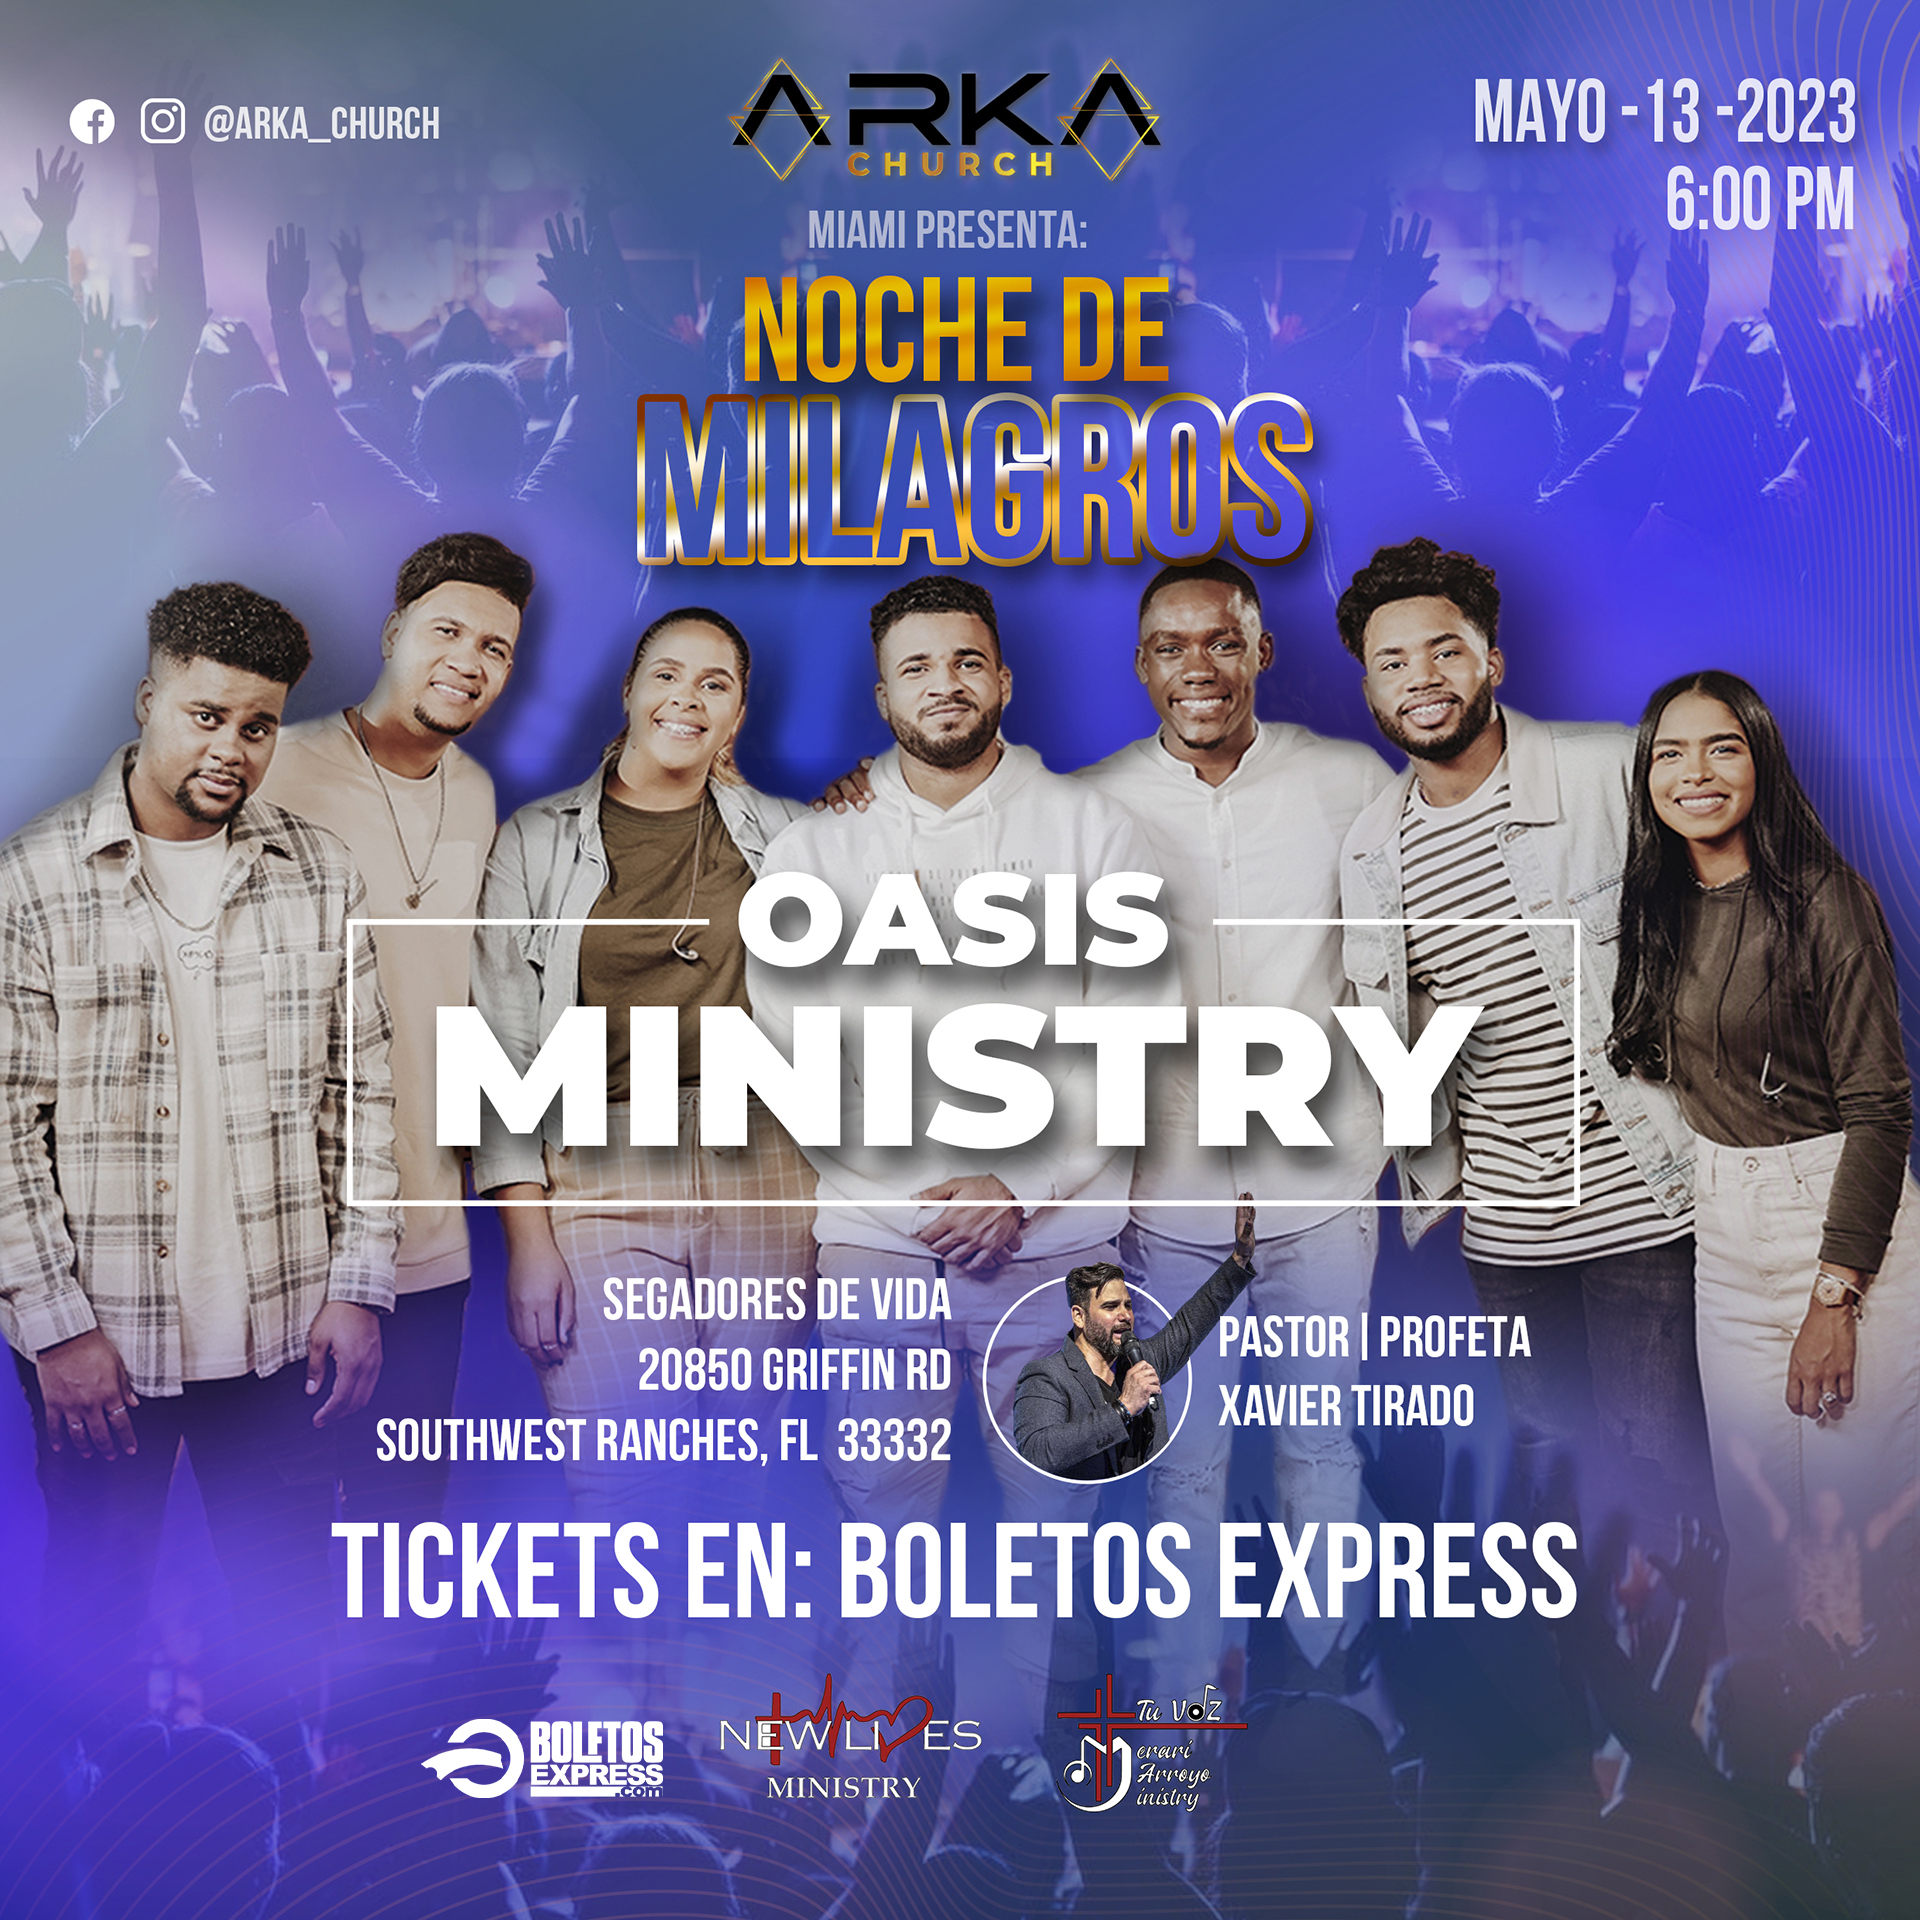 Oasis Ministry | Noche de Milagros - Miami Florida